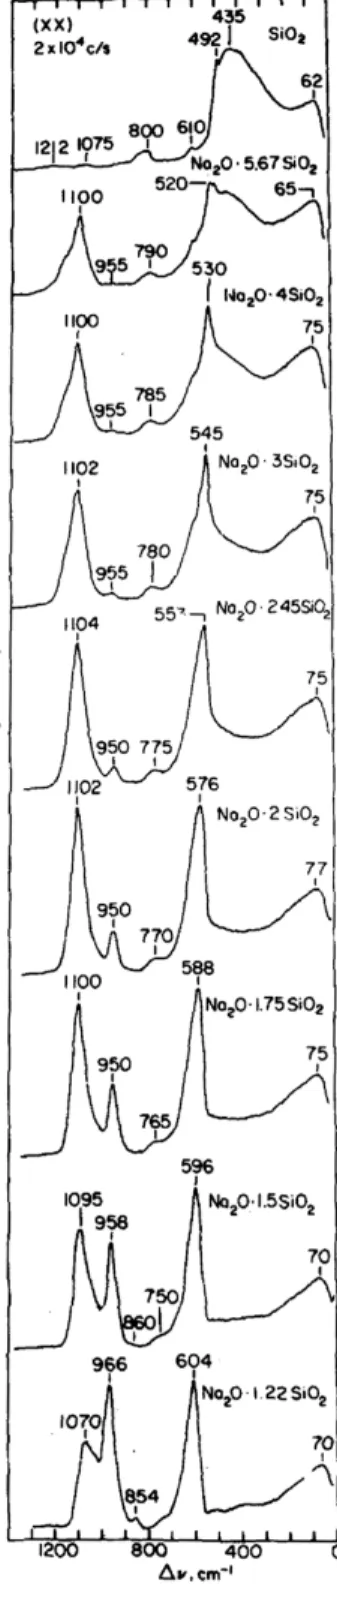 Figure 2.5 – Spectres Raman de silicates de sodium amorphe obtenus par T. Furukawa [74].